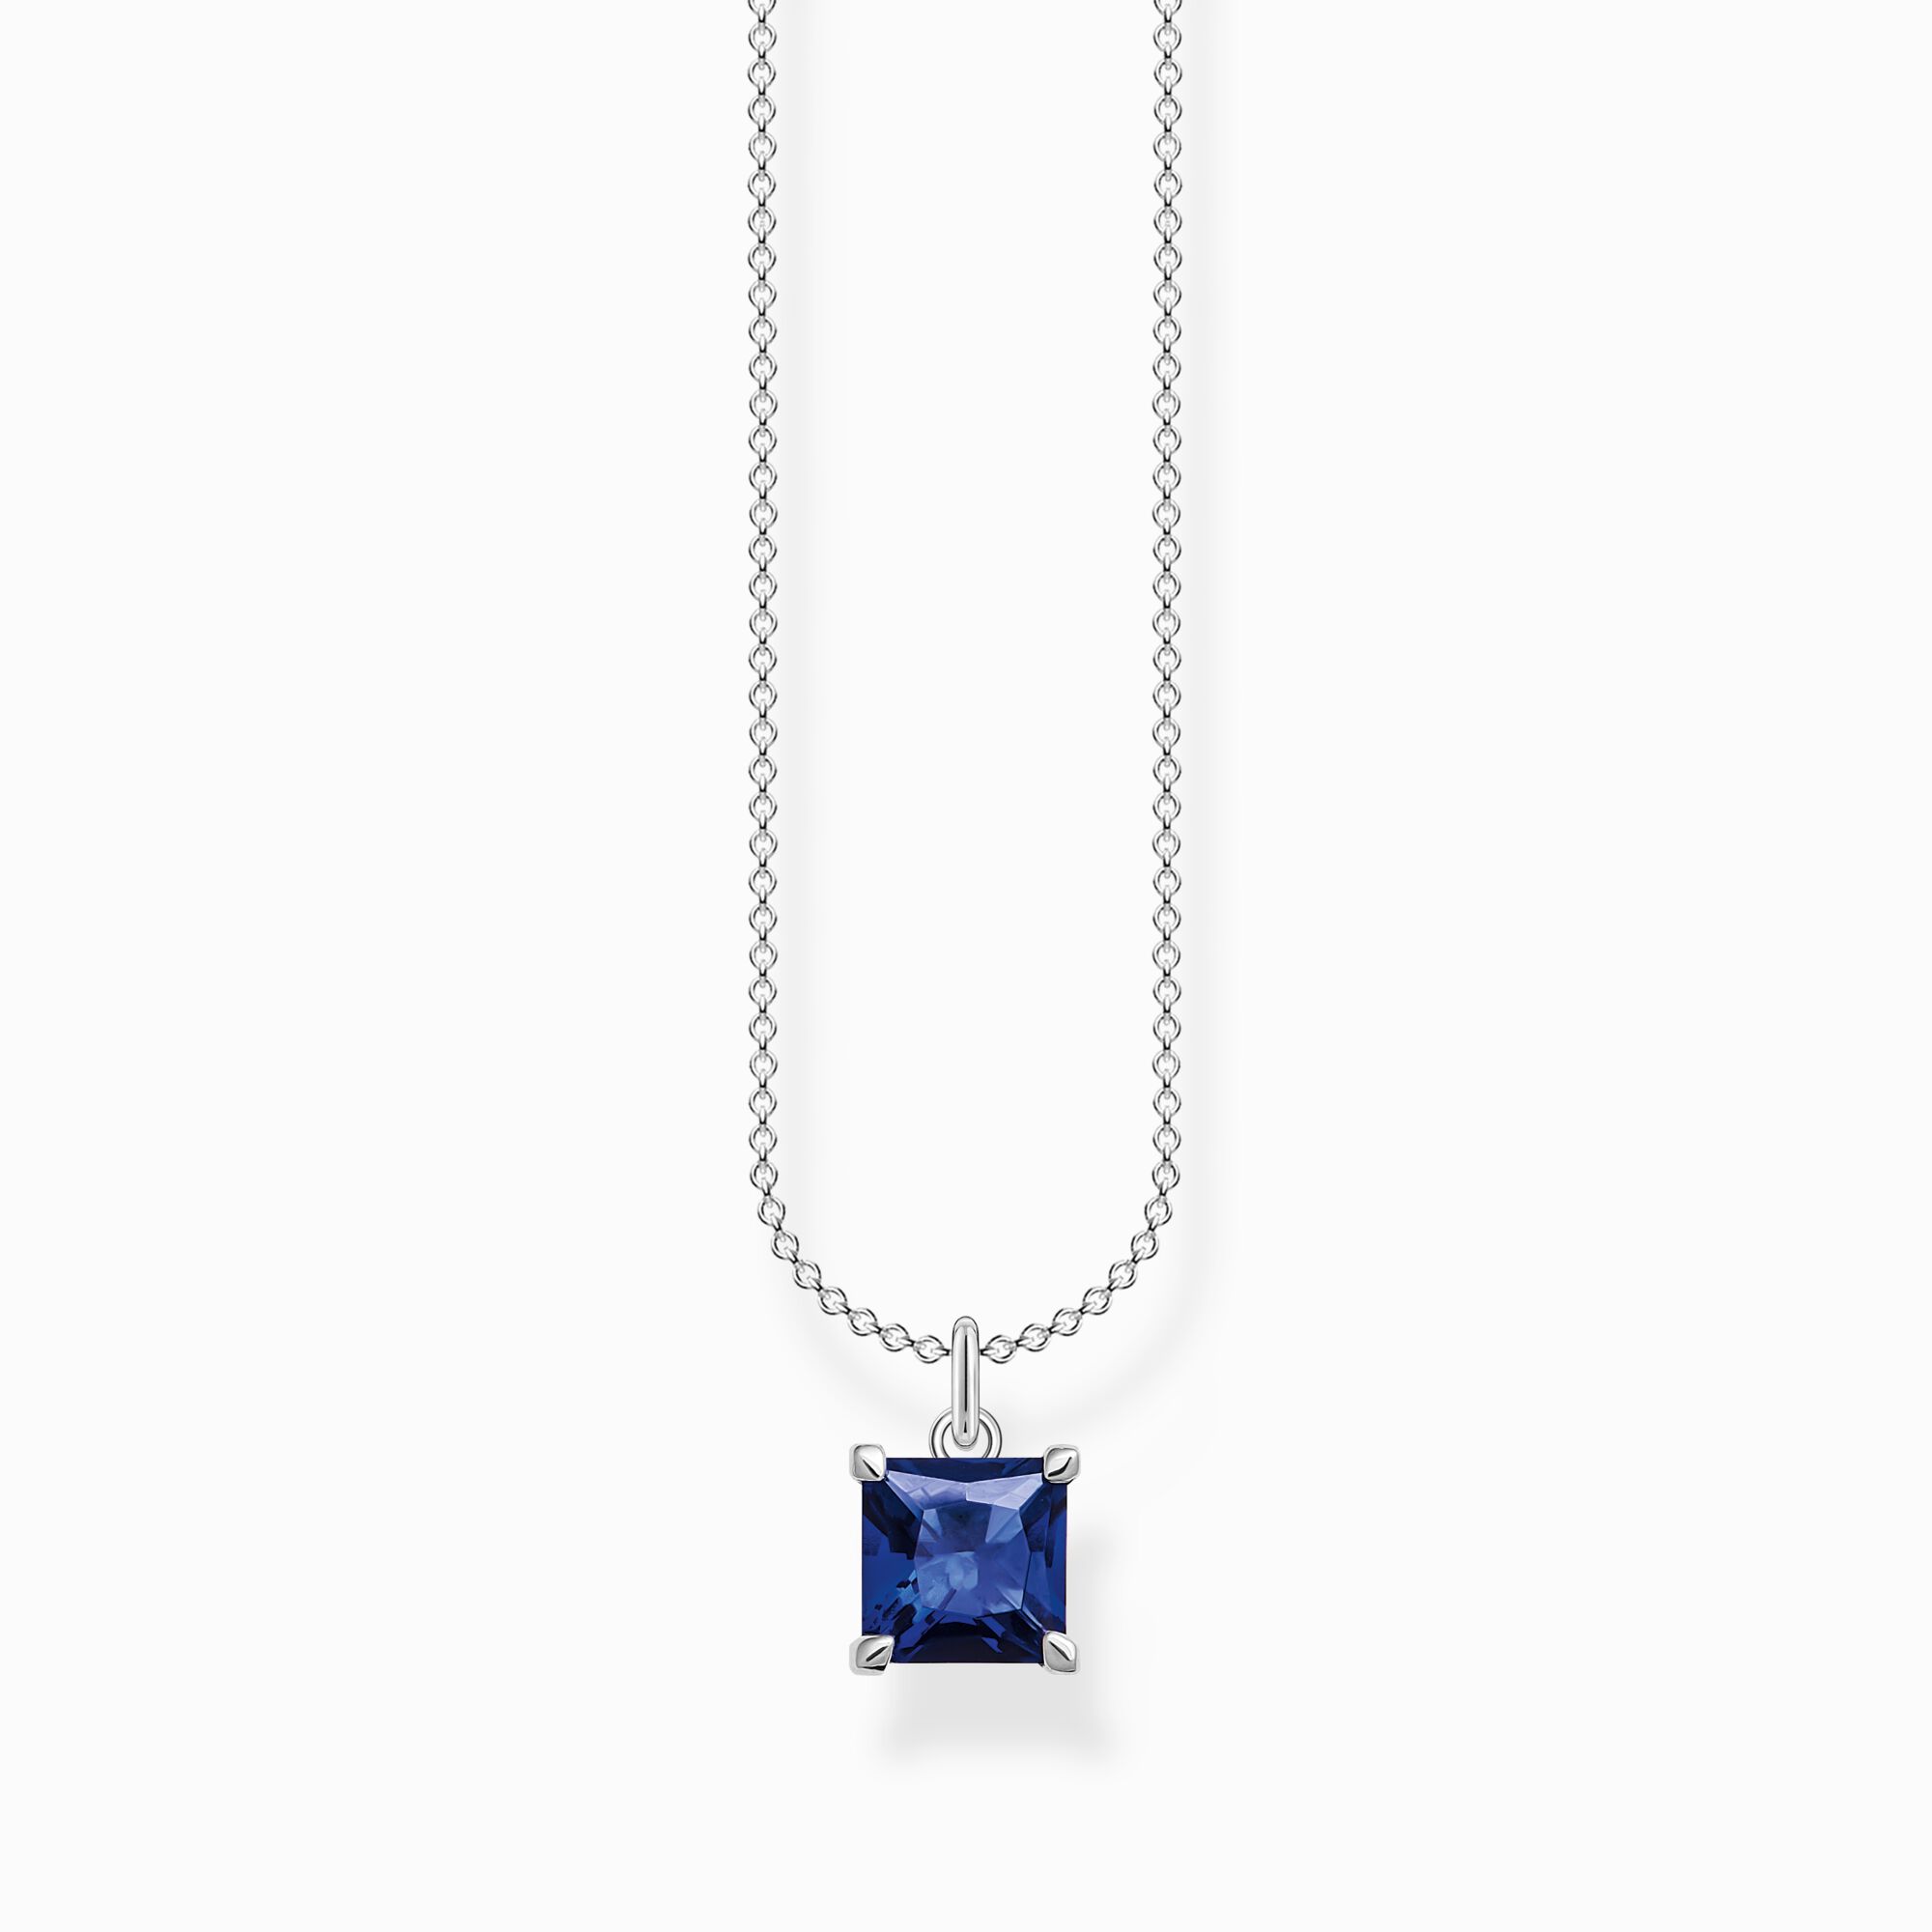 Necklace with pendant, SABO – THOMAS sapphire blue stone